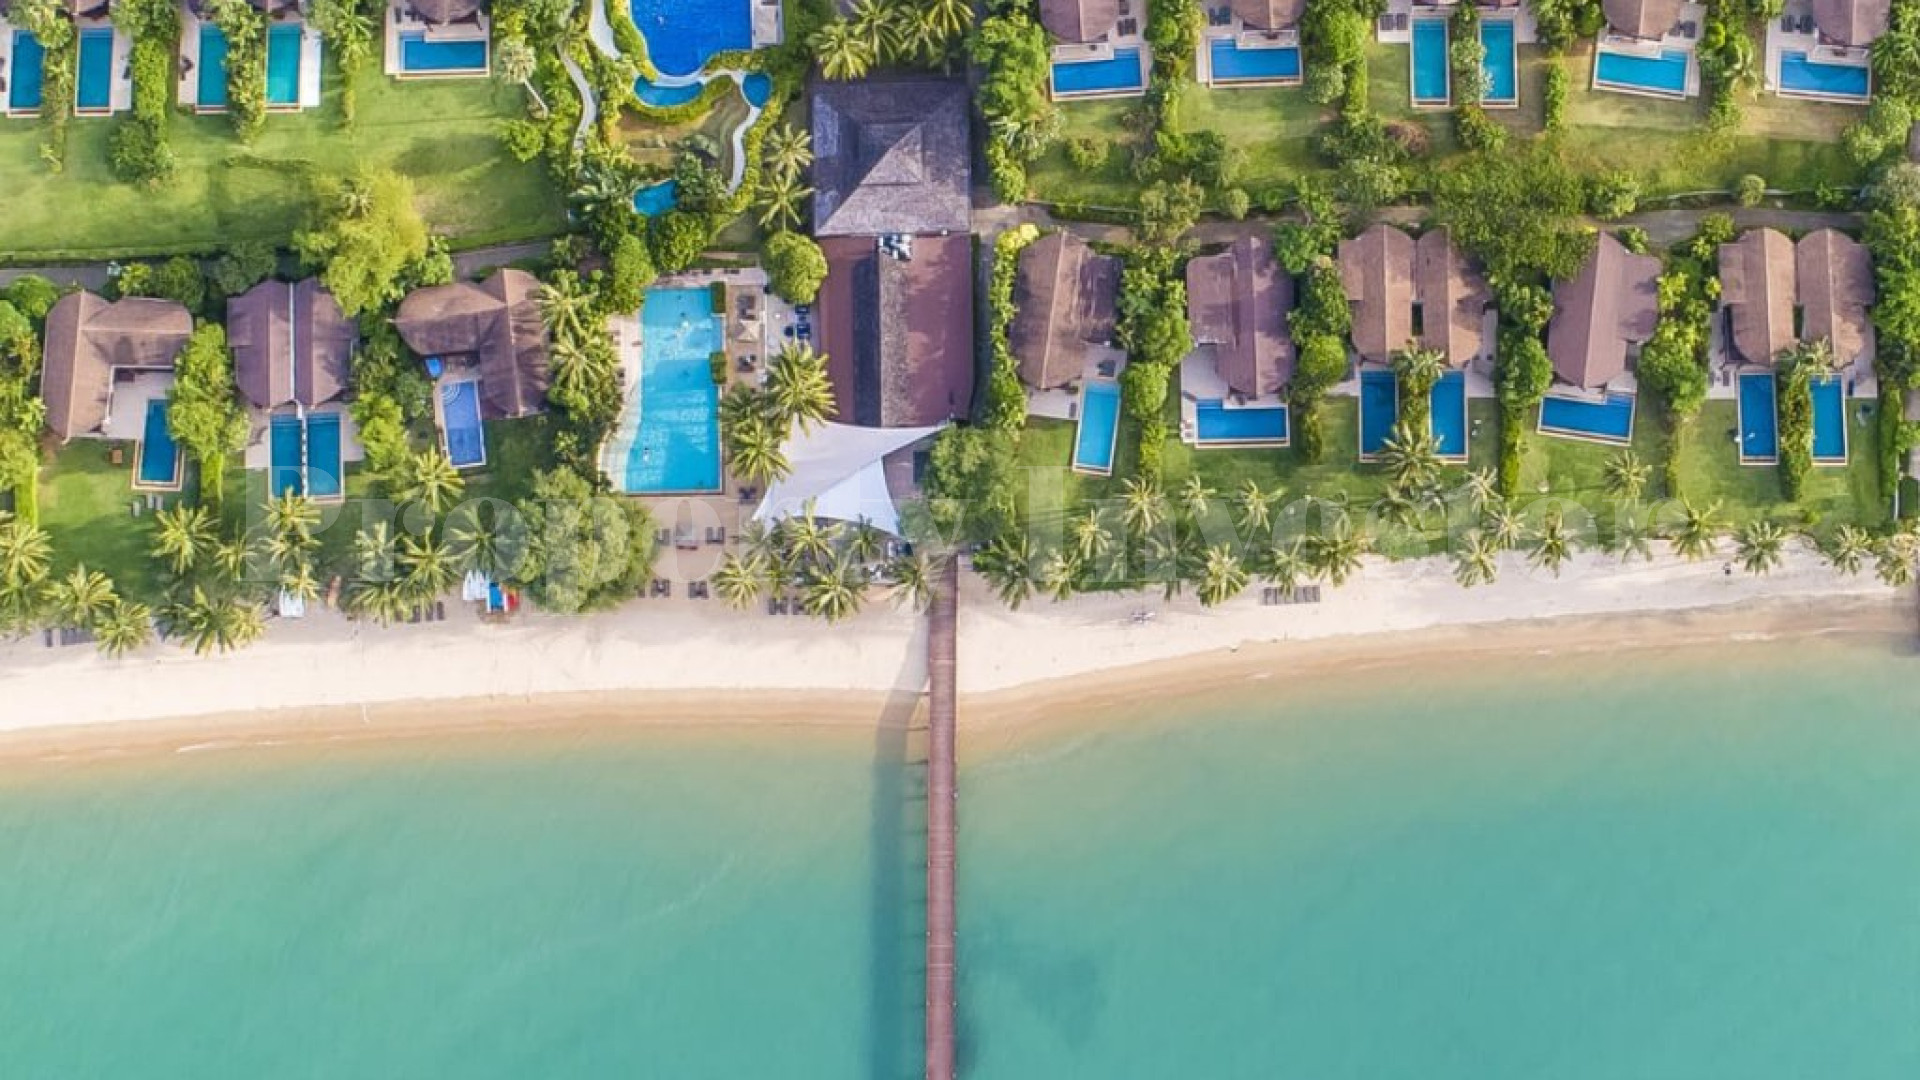 Popular 5* Star Luxury Eco Island Resort for Sale in Phuket